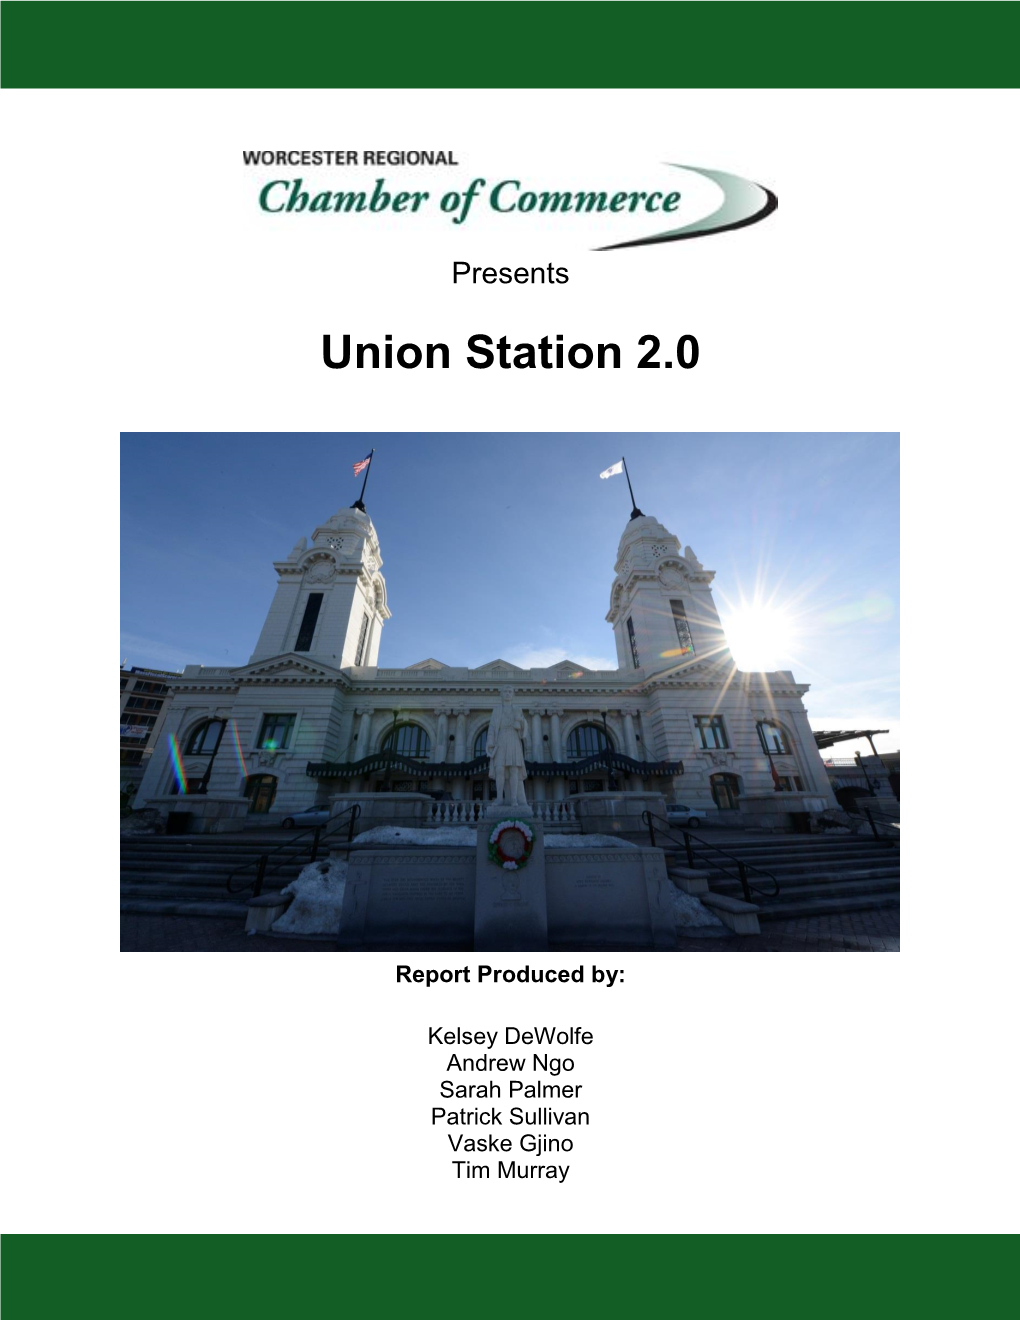 Union Station 2.0 Report